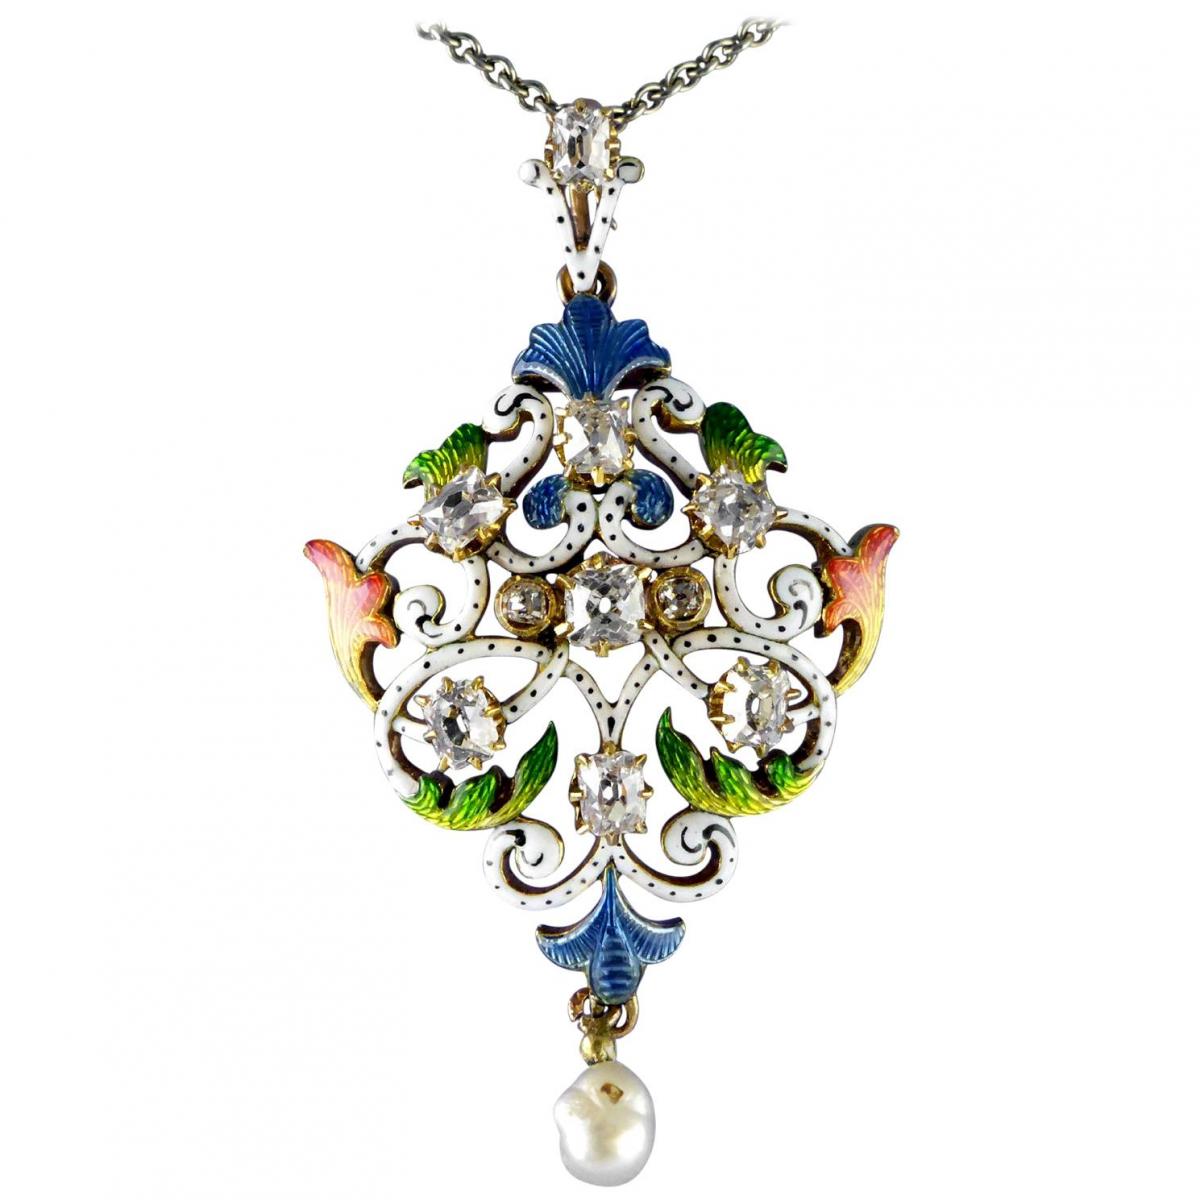 Art Nouveau Guilloché Enamel, Diamond, Pearl, Pendant circa 1900